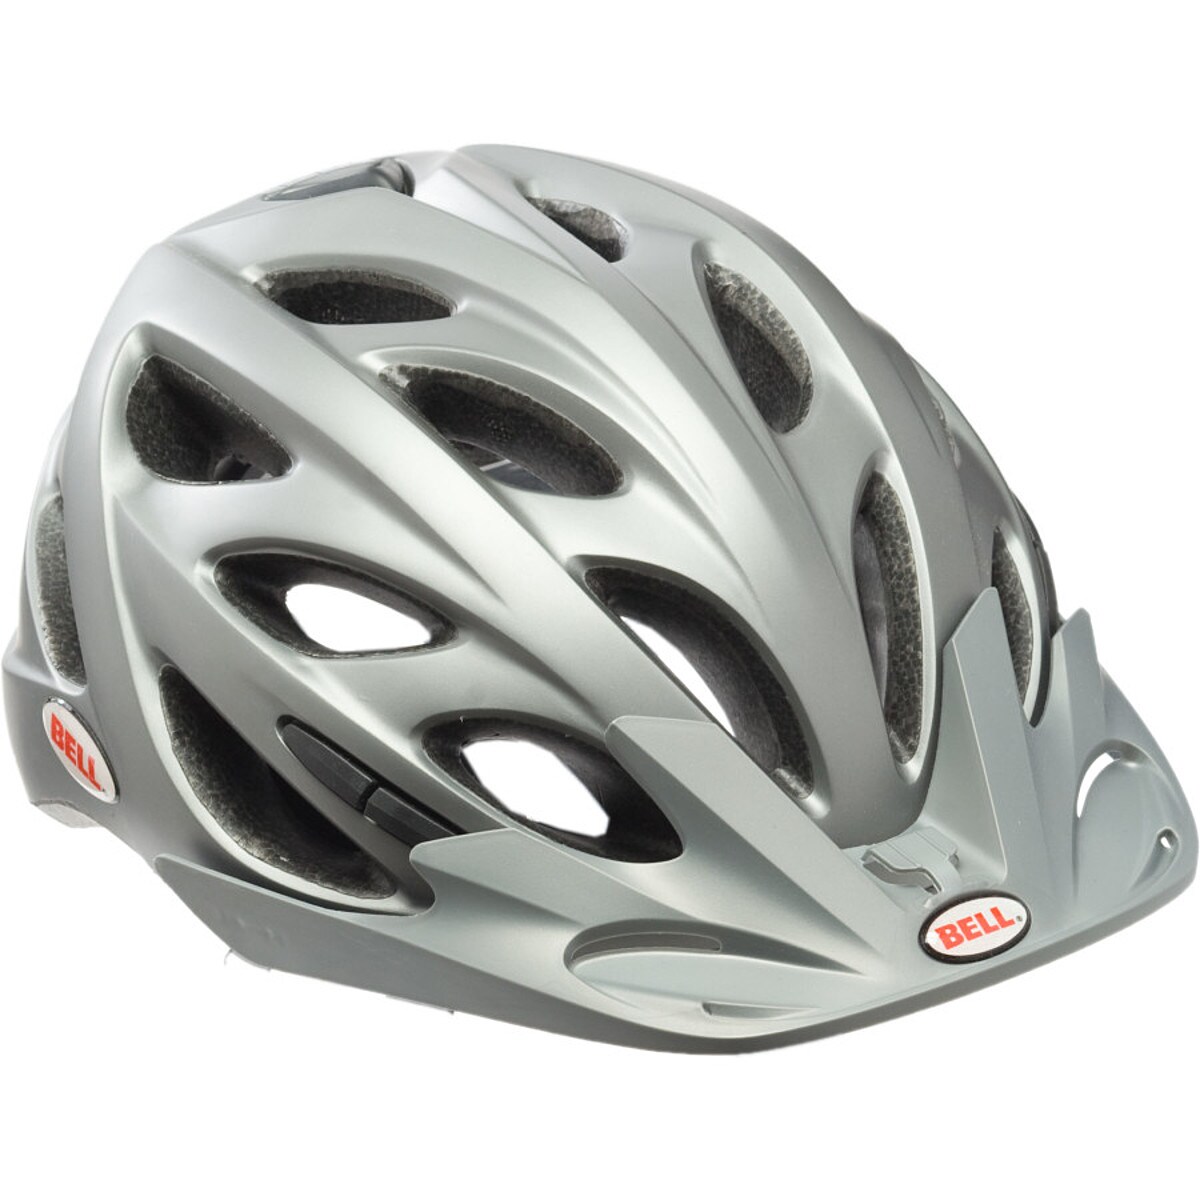 bell muni bike helmet